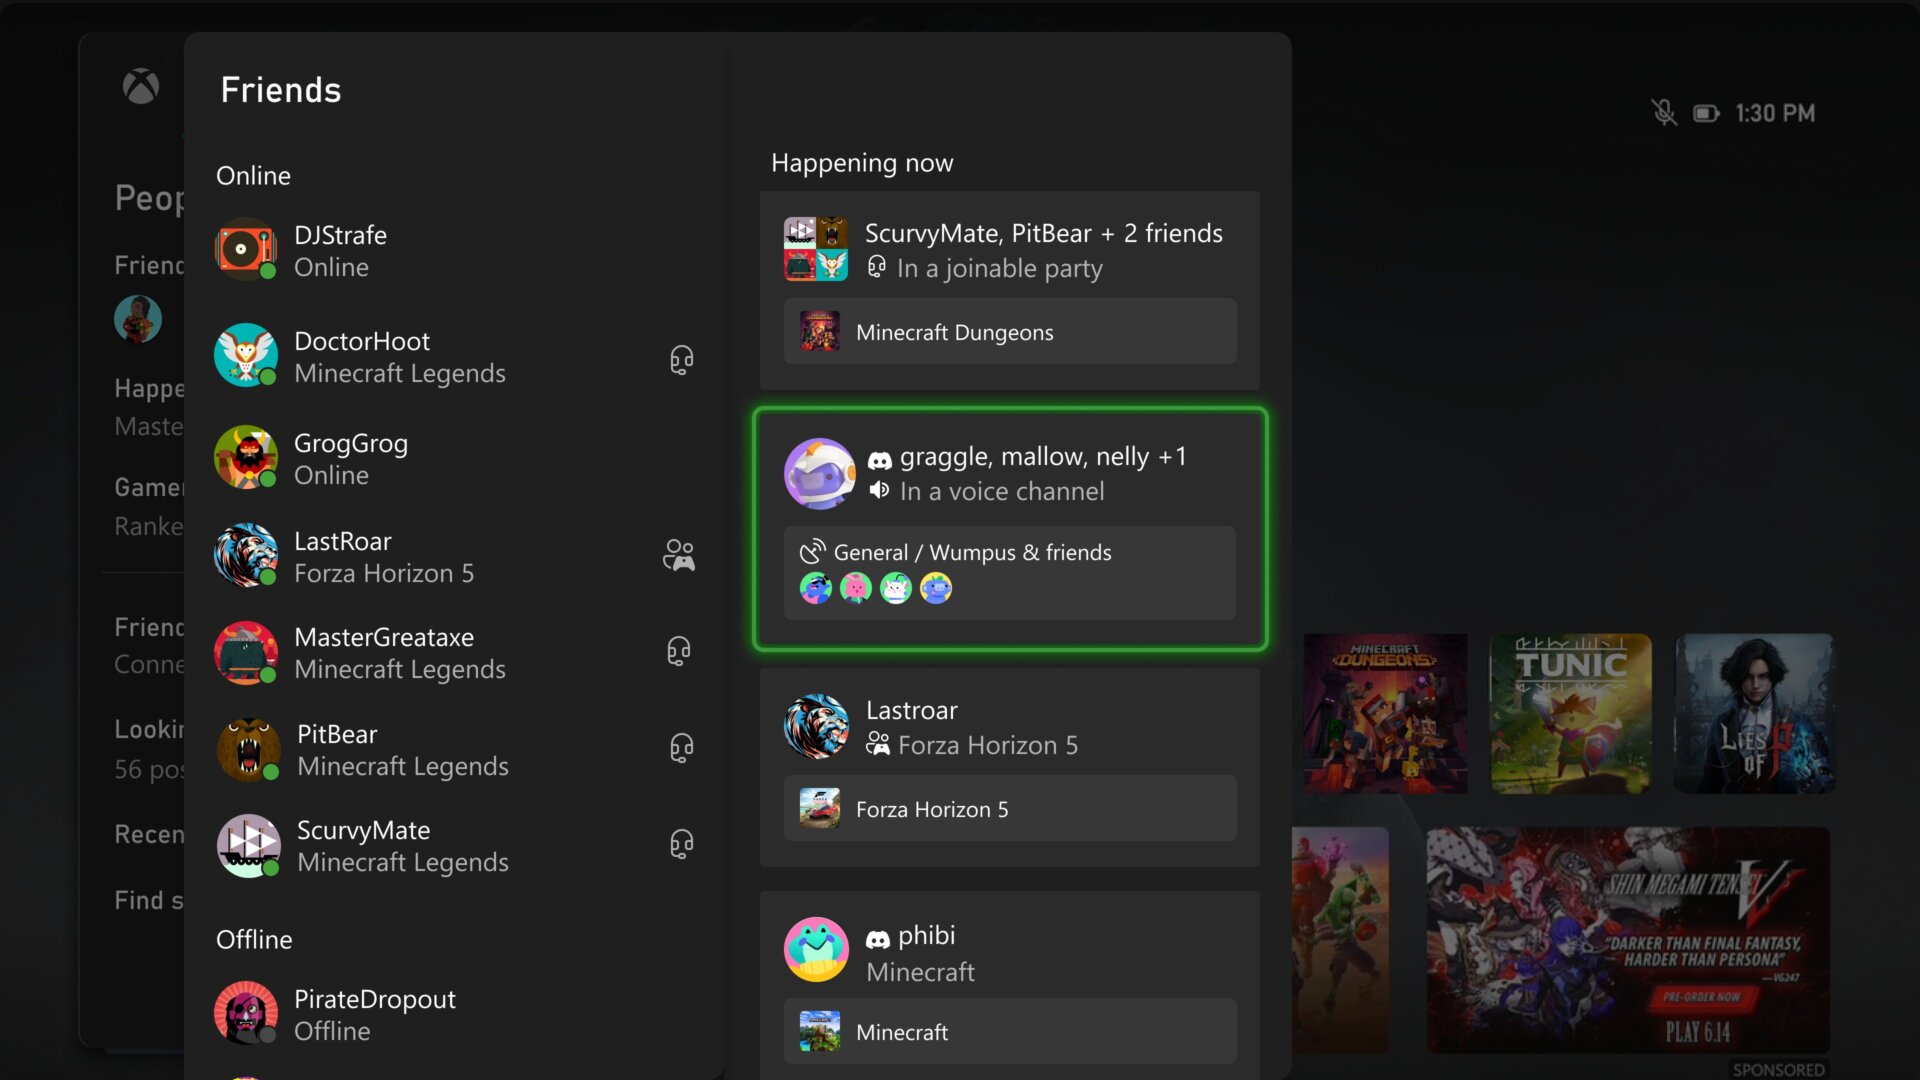 Discord Friend List On Xbox